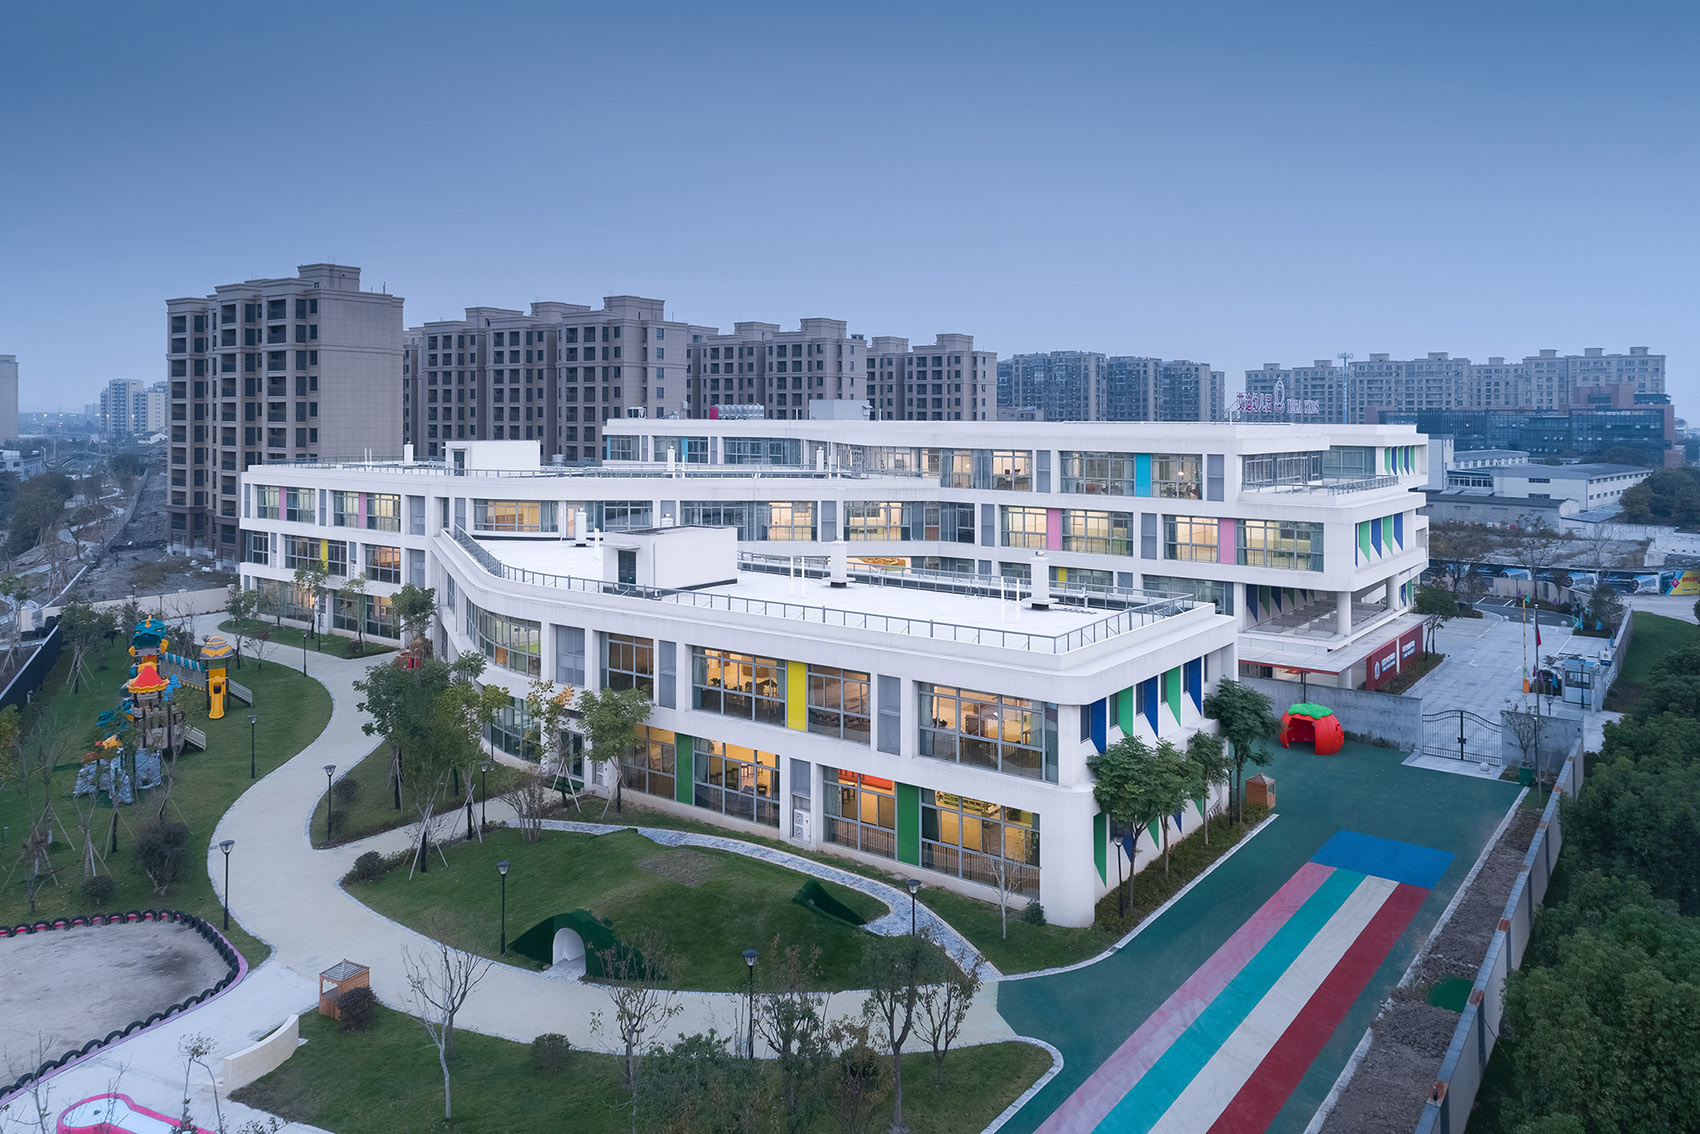 009-yy-terrace-school-ningbo-idea-kids-international-kindergarten-china-by-archgrid.jpg